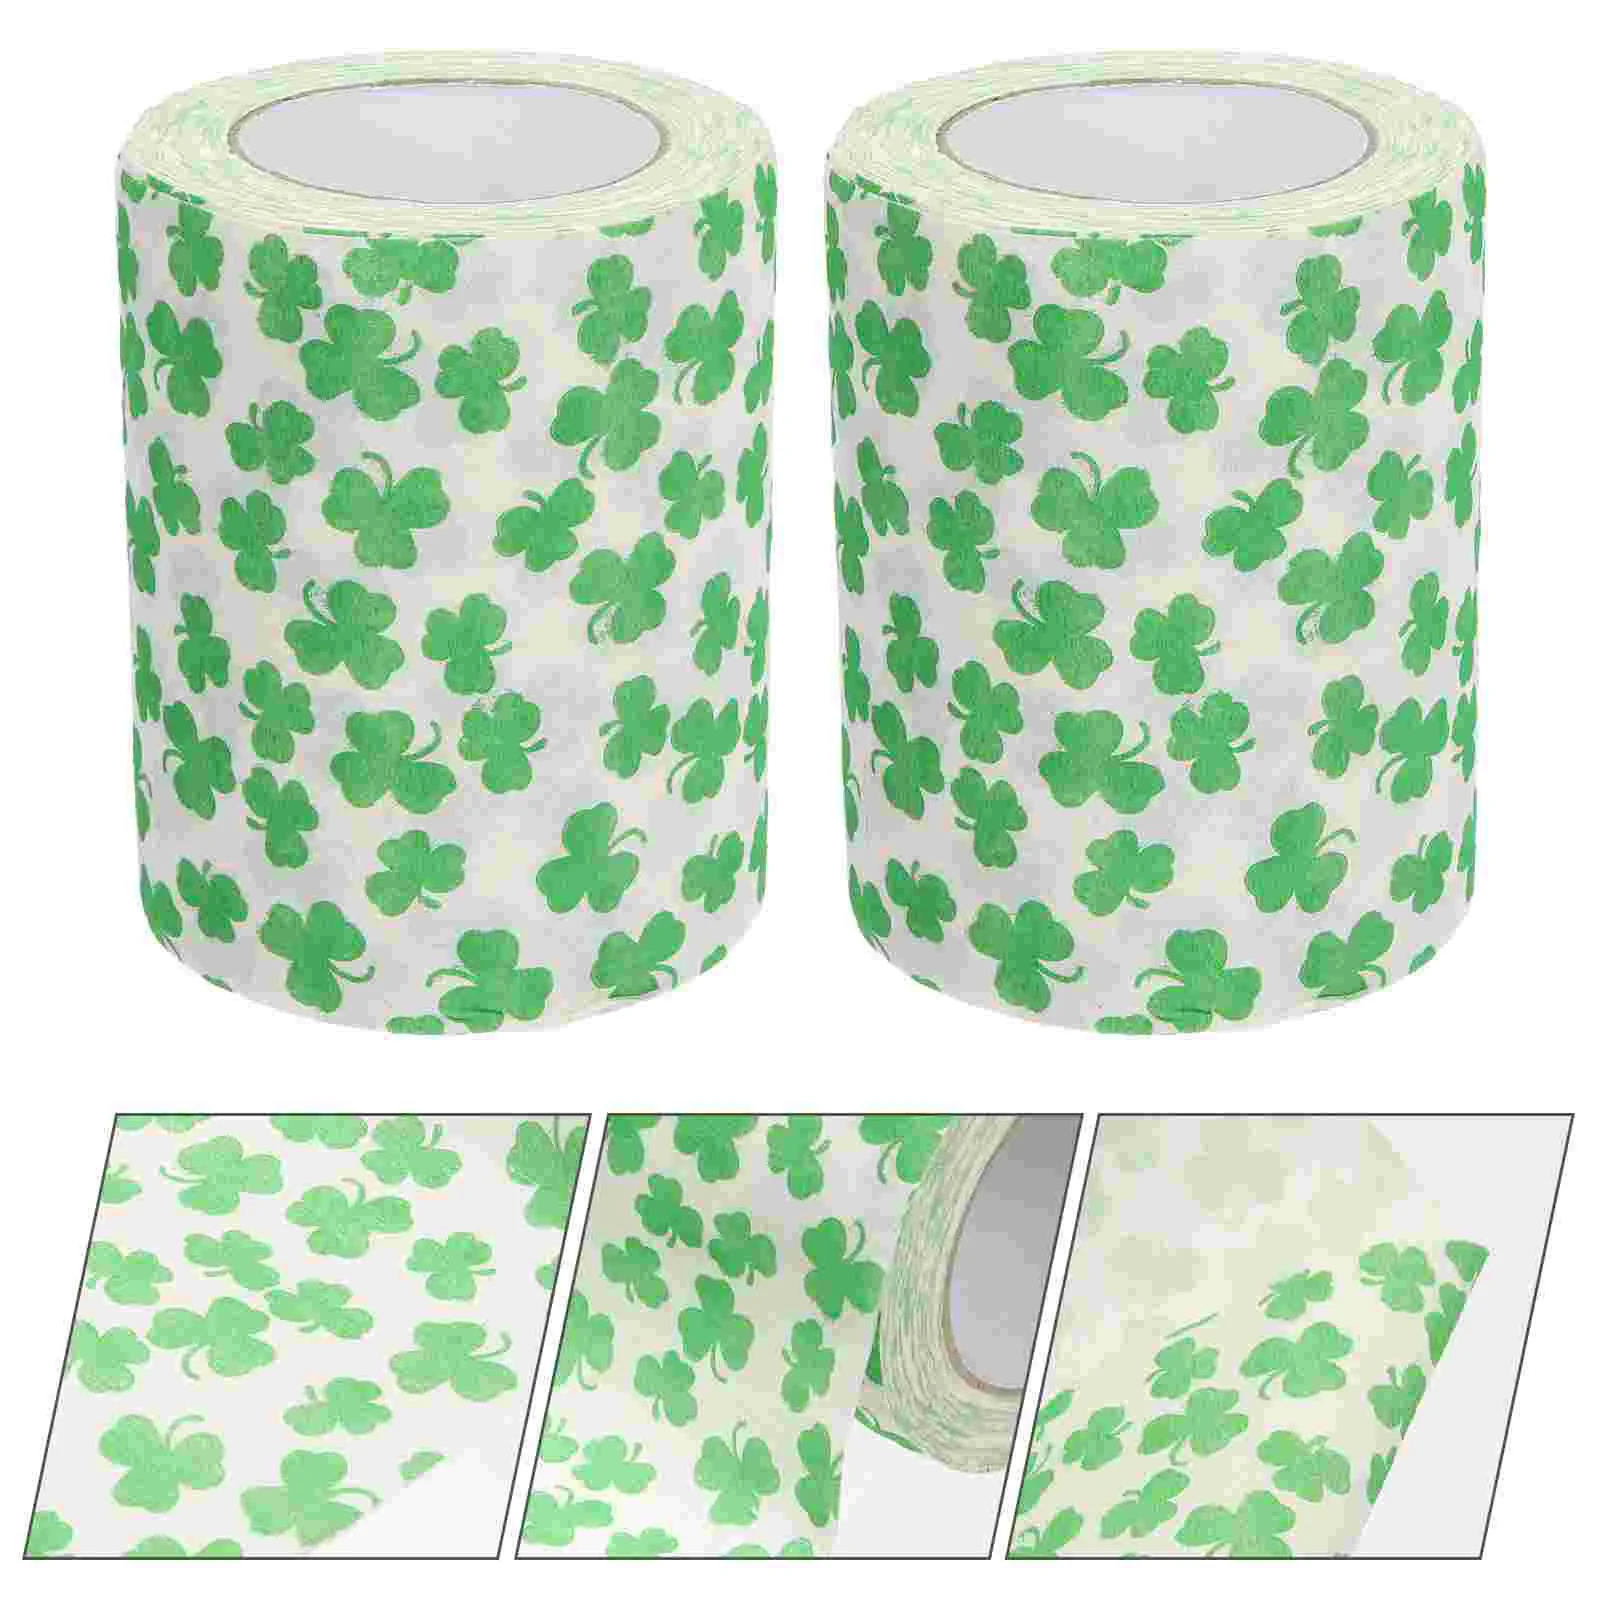 2 Rollen Toiletten papier geschmeidig Papier bedruckte Servietten Bad gebrauchte Papiere liefert